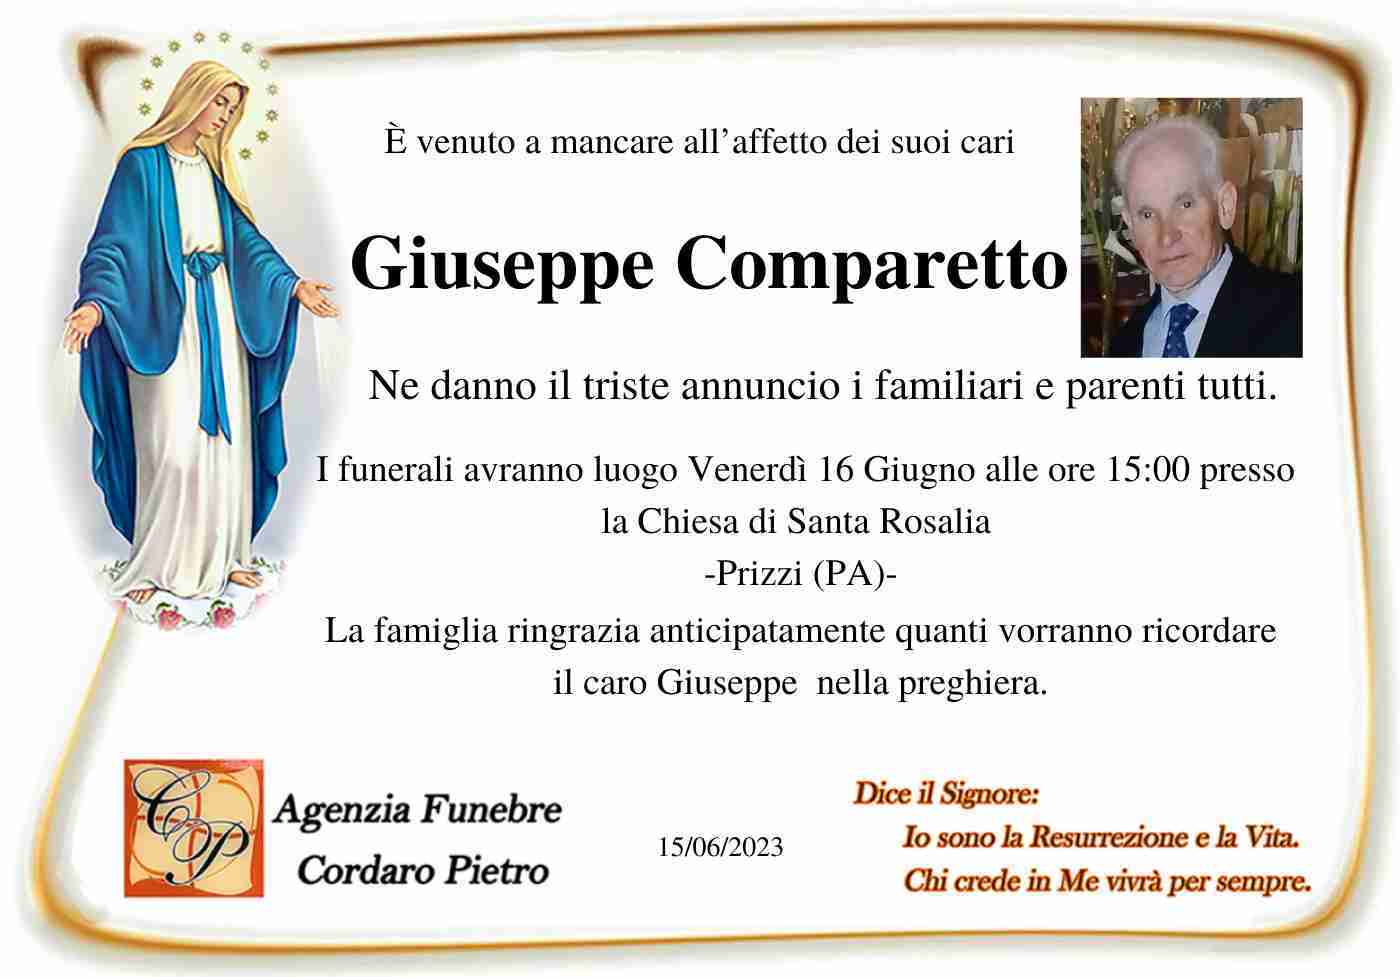 Giuseppe Comparetto